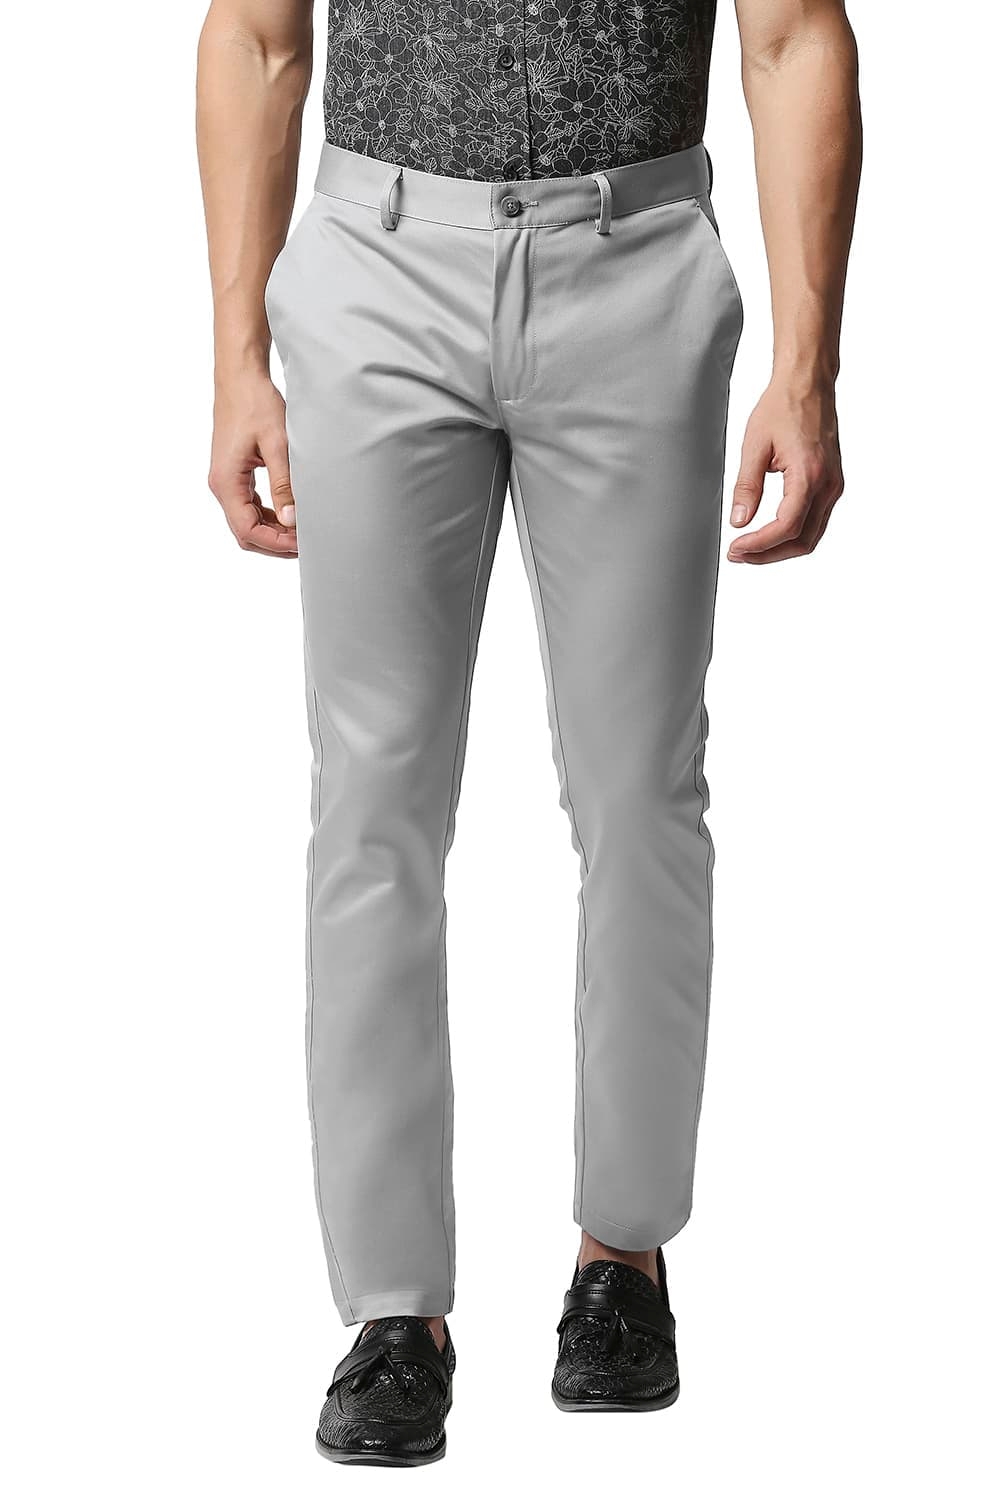 Basics | Basics Tapered Fit Grey Satin Trousers